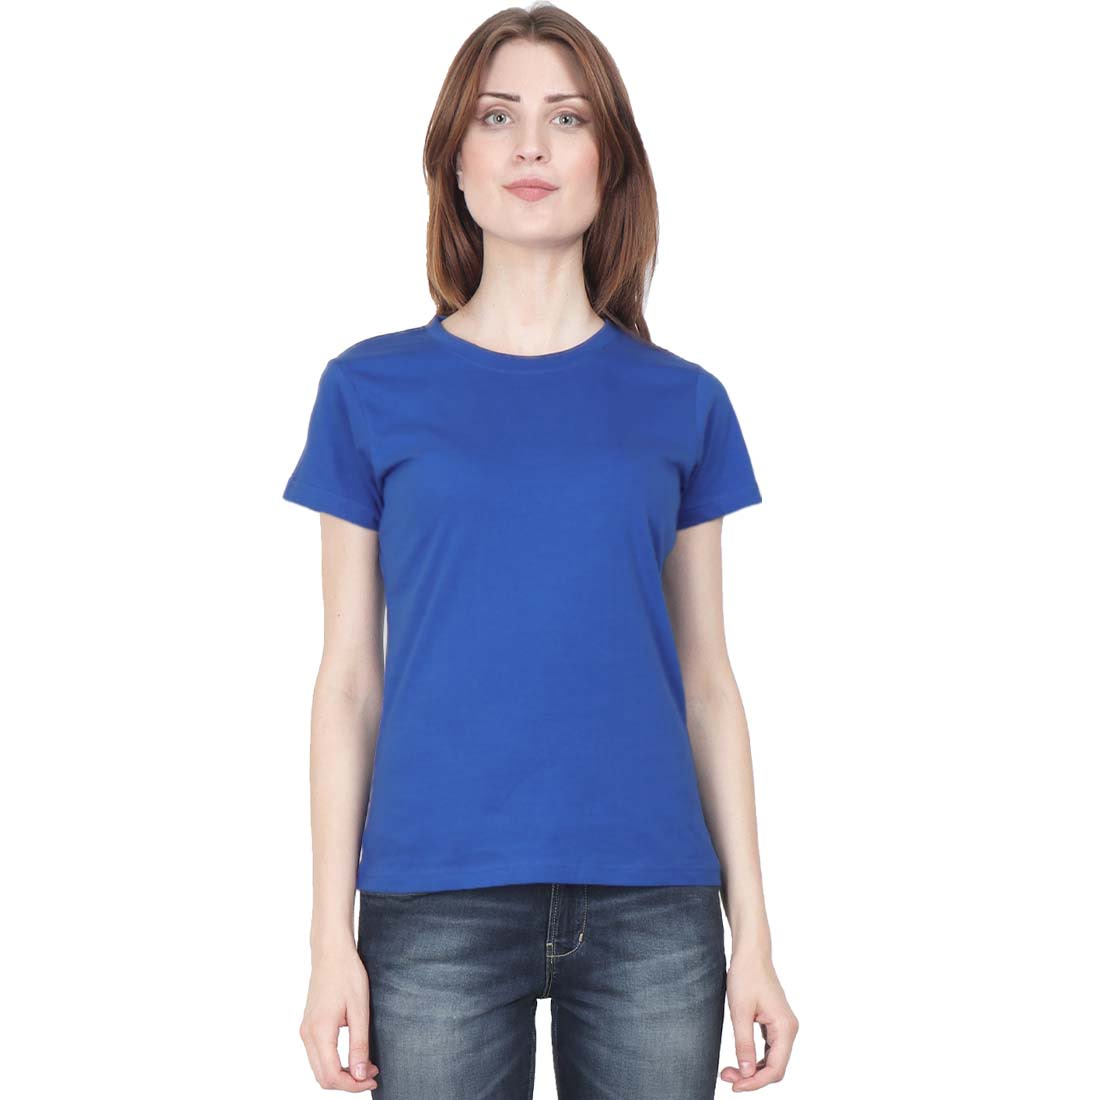 Women's Royal Blue Half Sleeve Round Neck Plain T-Shirt - Crazy Punch